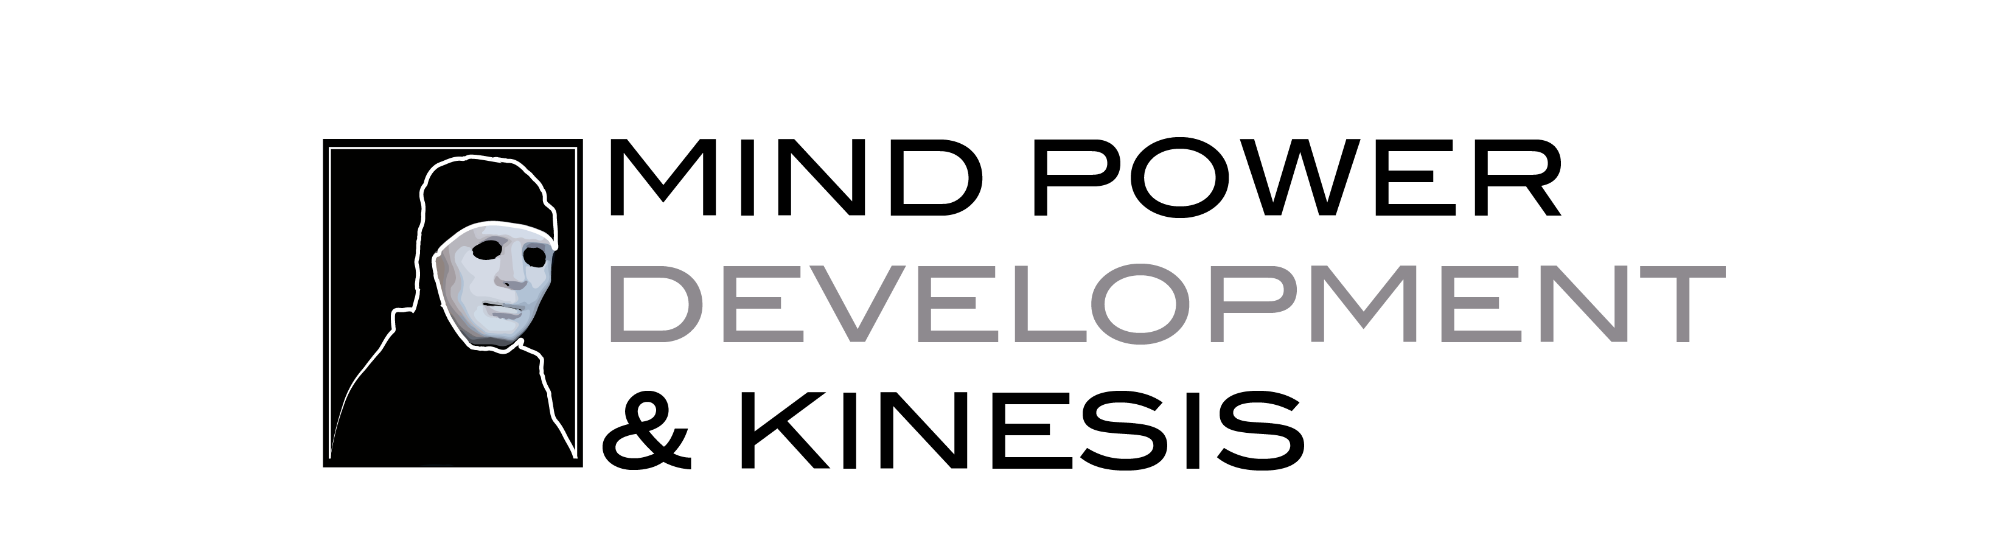 Mind Power Development & Kinesis logo